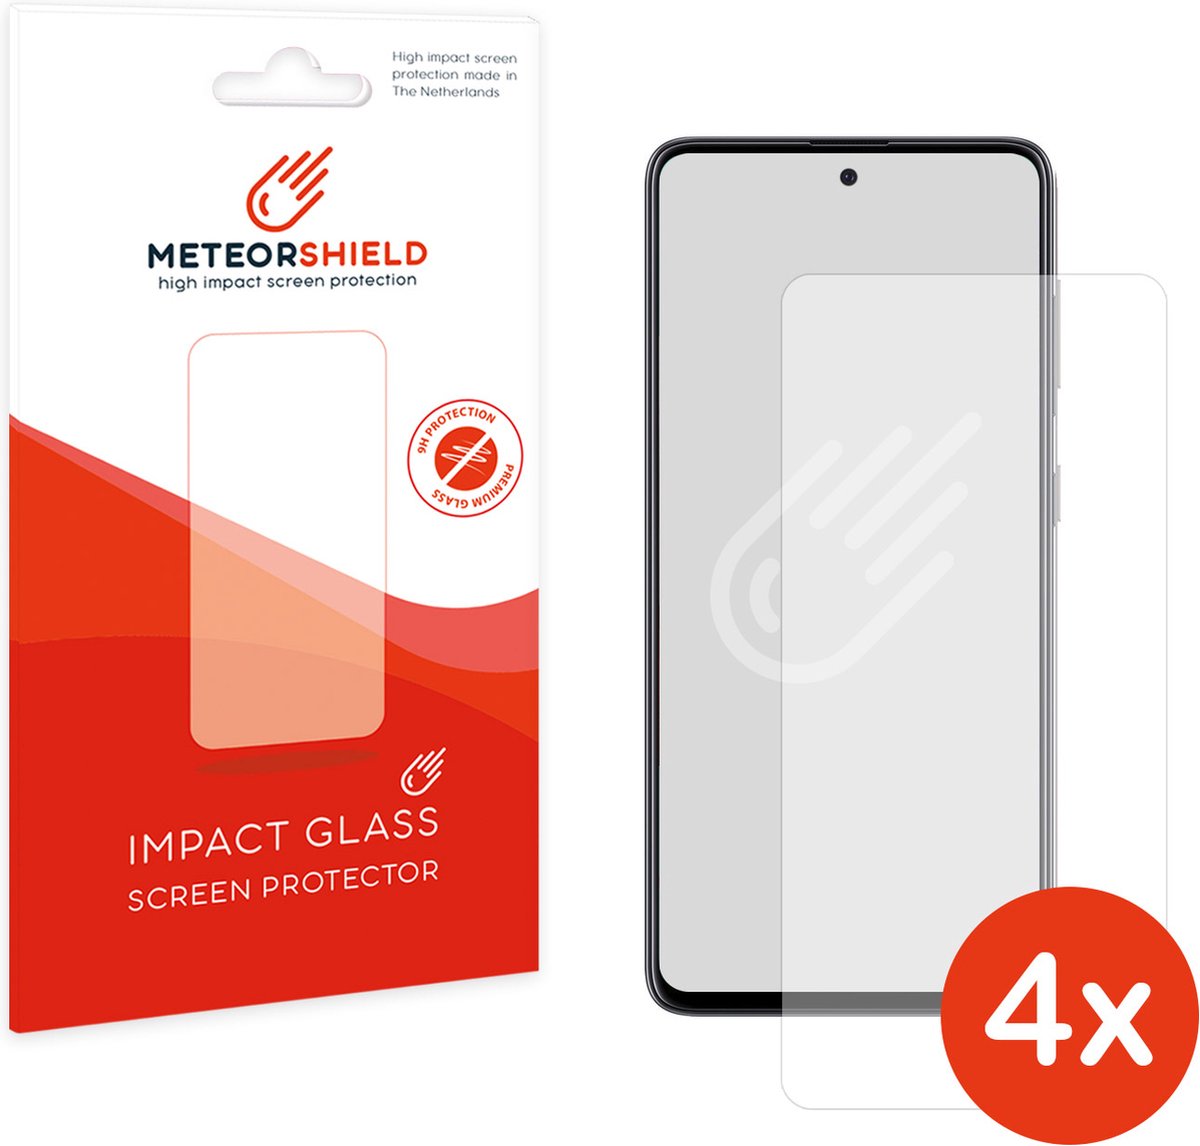 4 stuks: Meteorshield Samsung Galaxy A52s screenprotector - Ultra clear impact glass